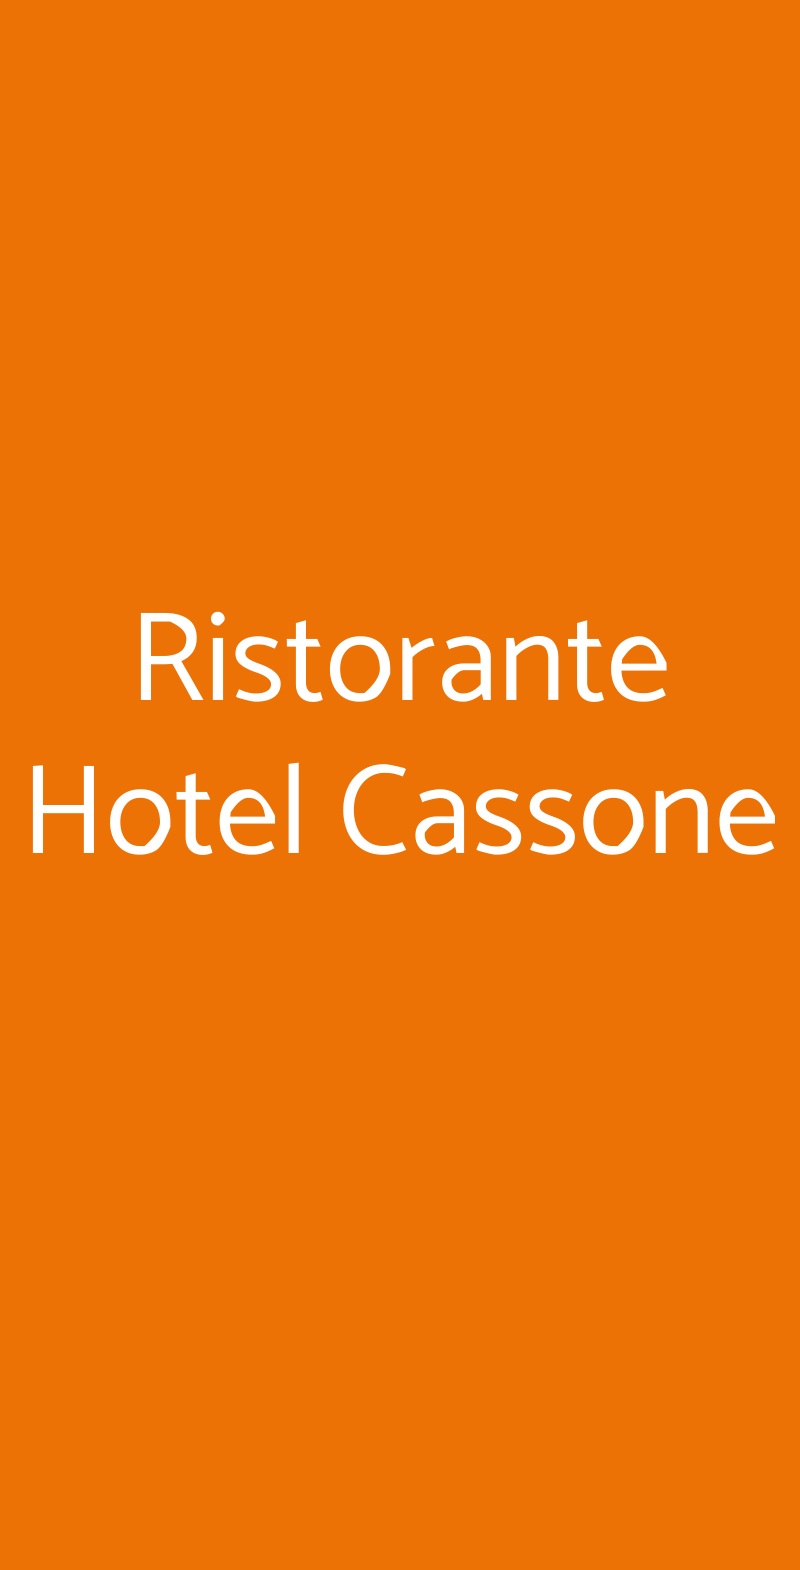 Ristorante Hotel Cassone Malcesine menù 1 pagina